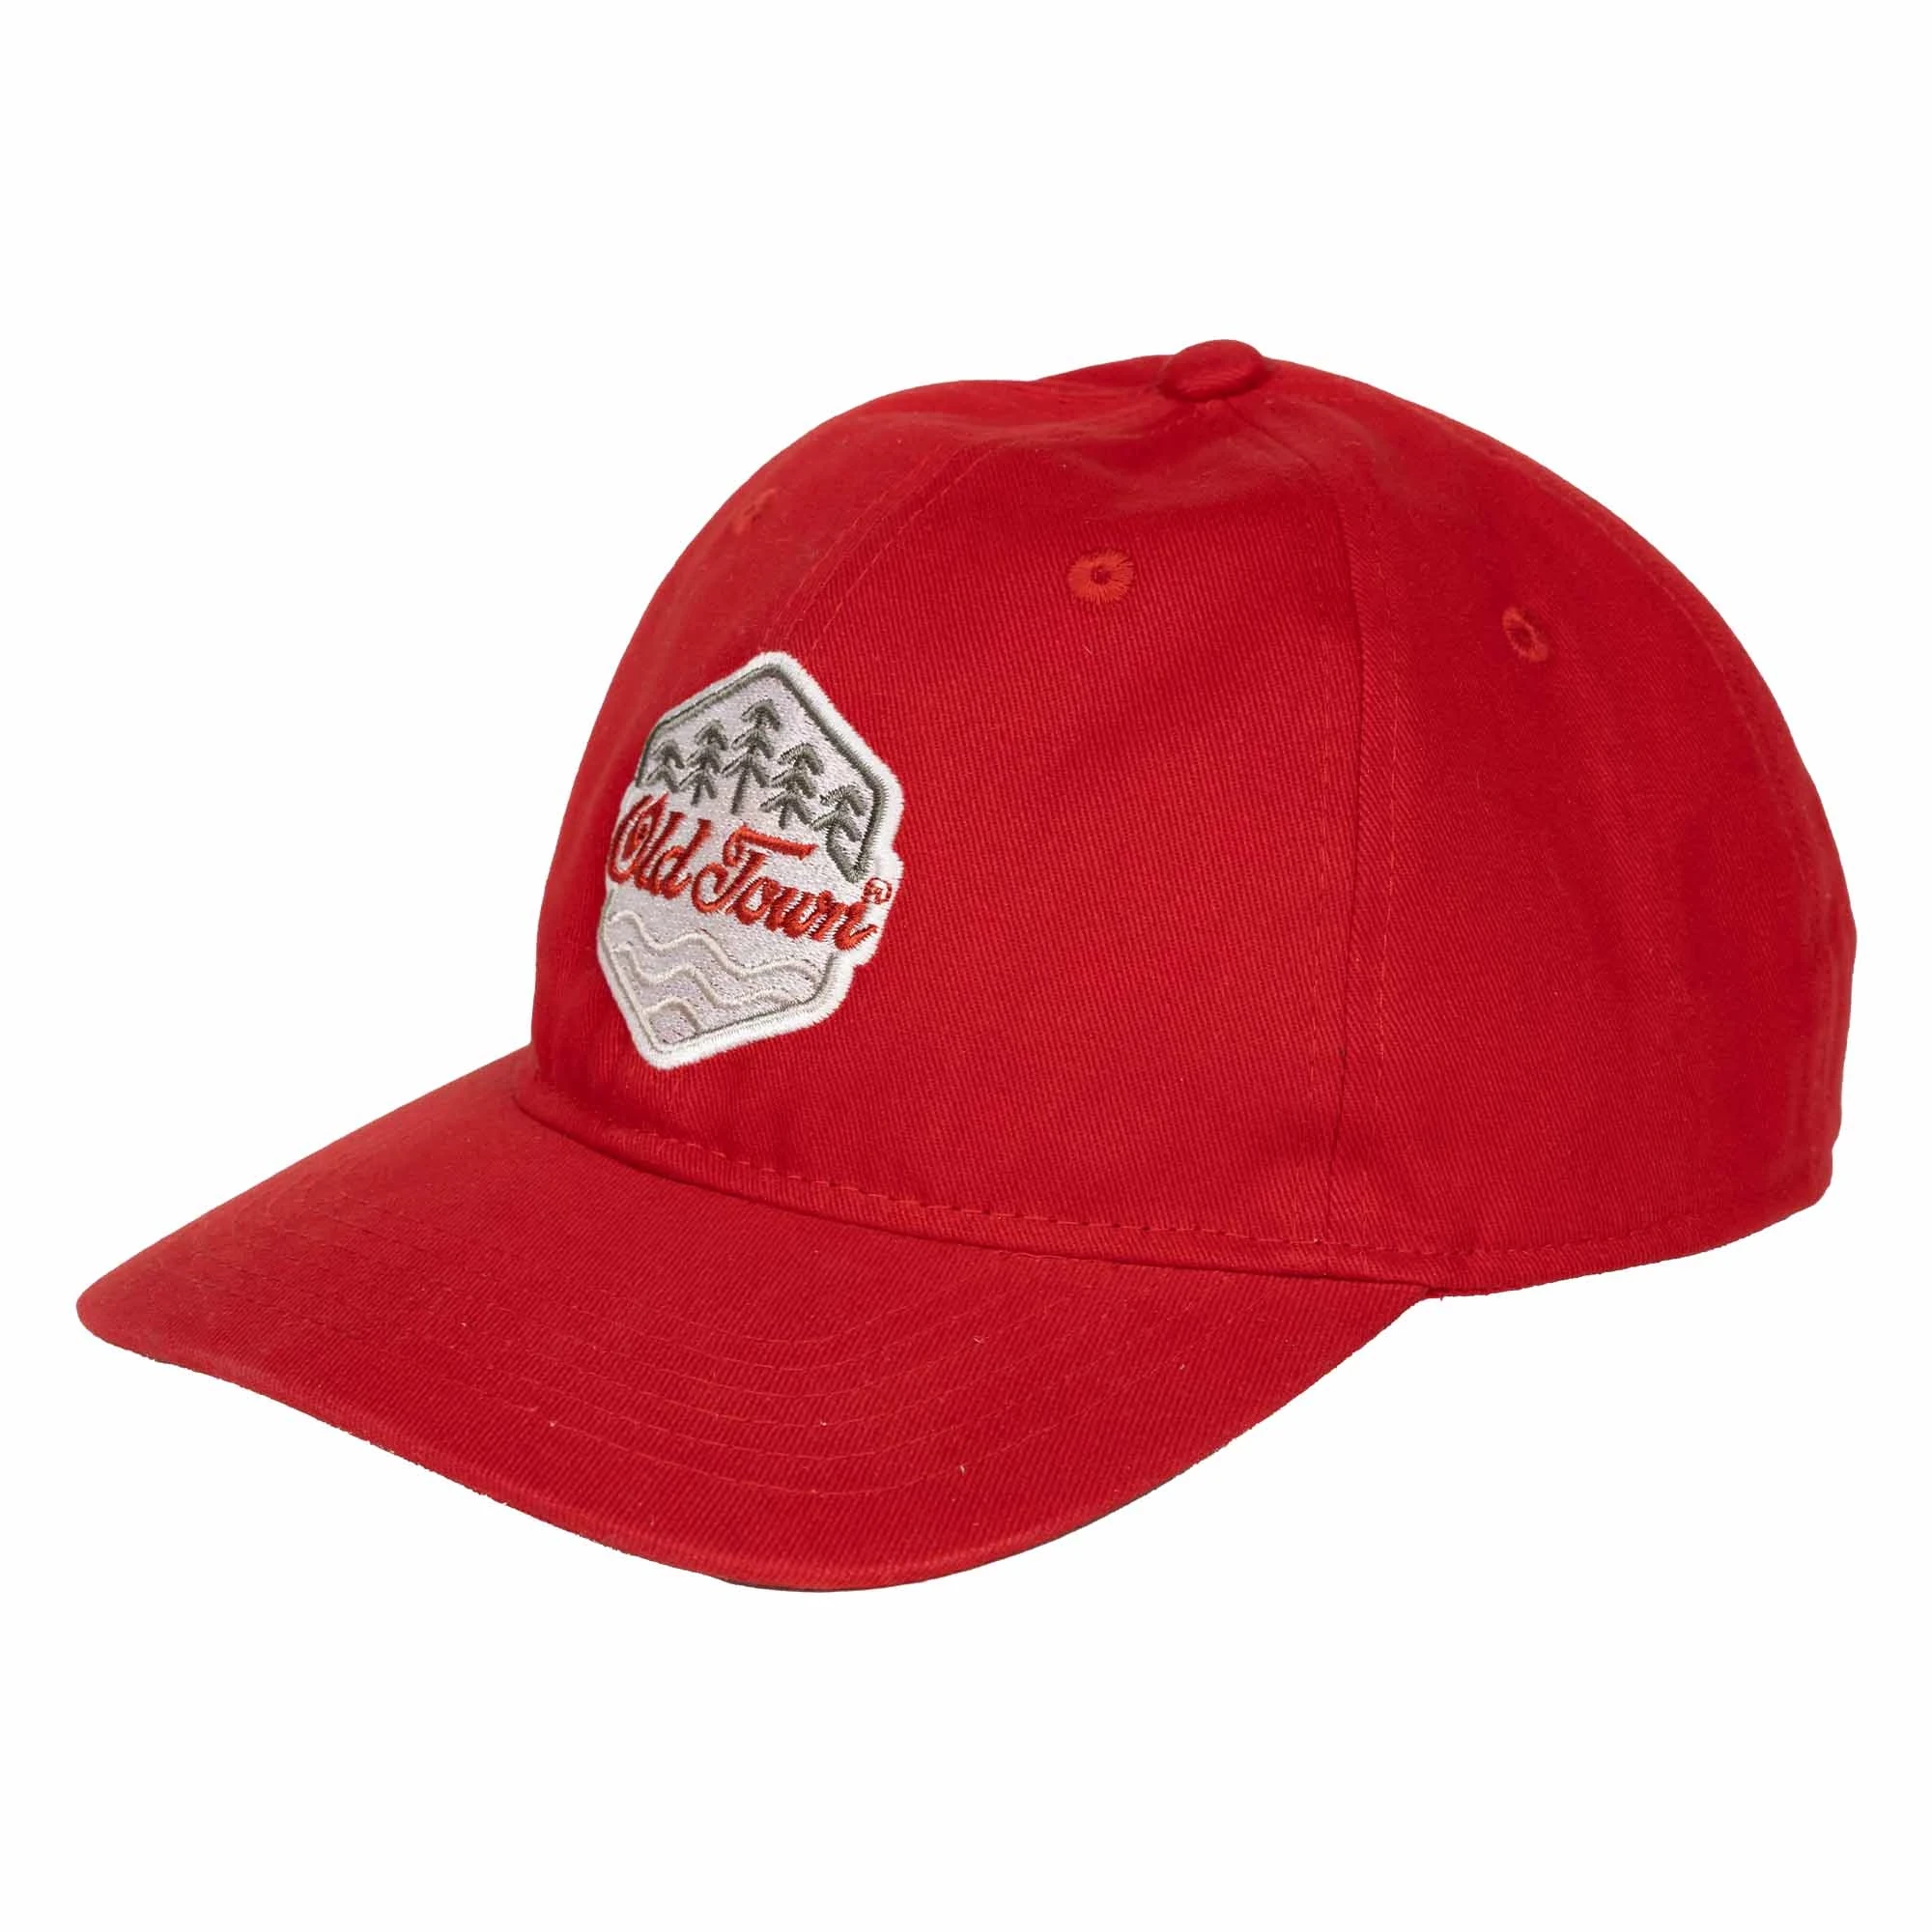 OT Red Hat - Primary